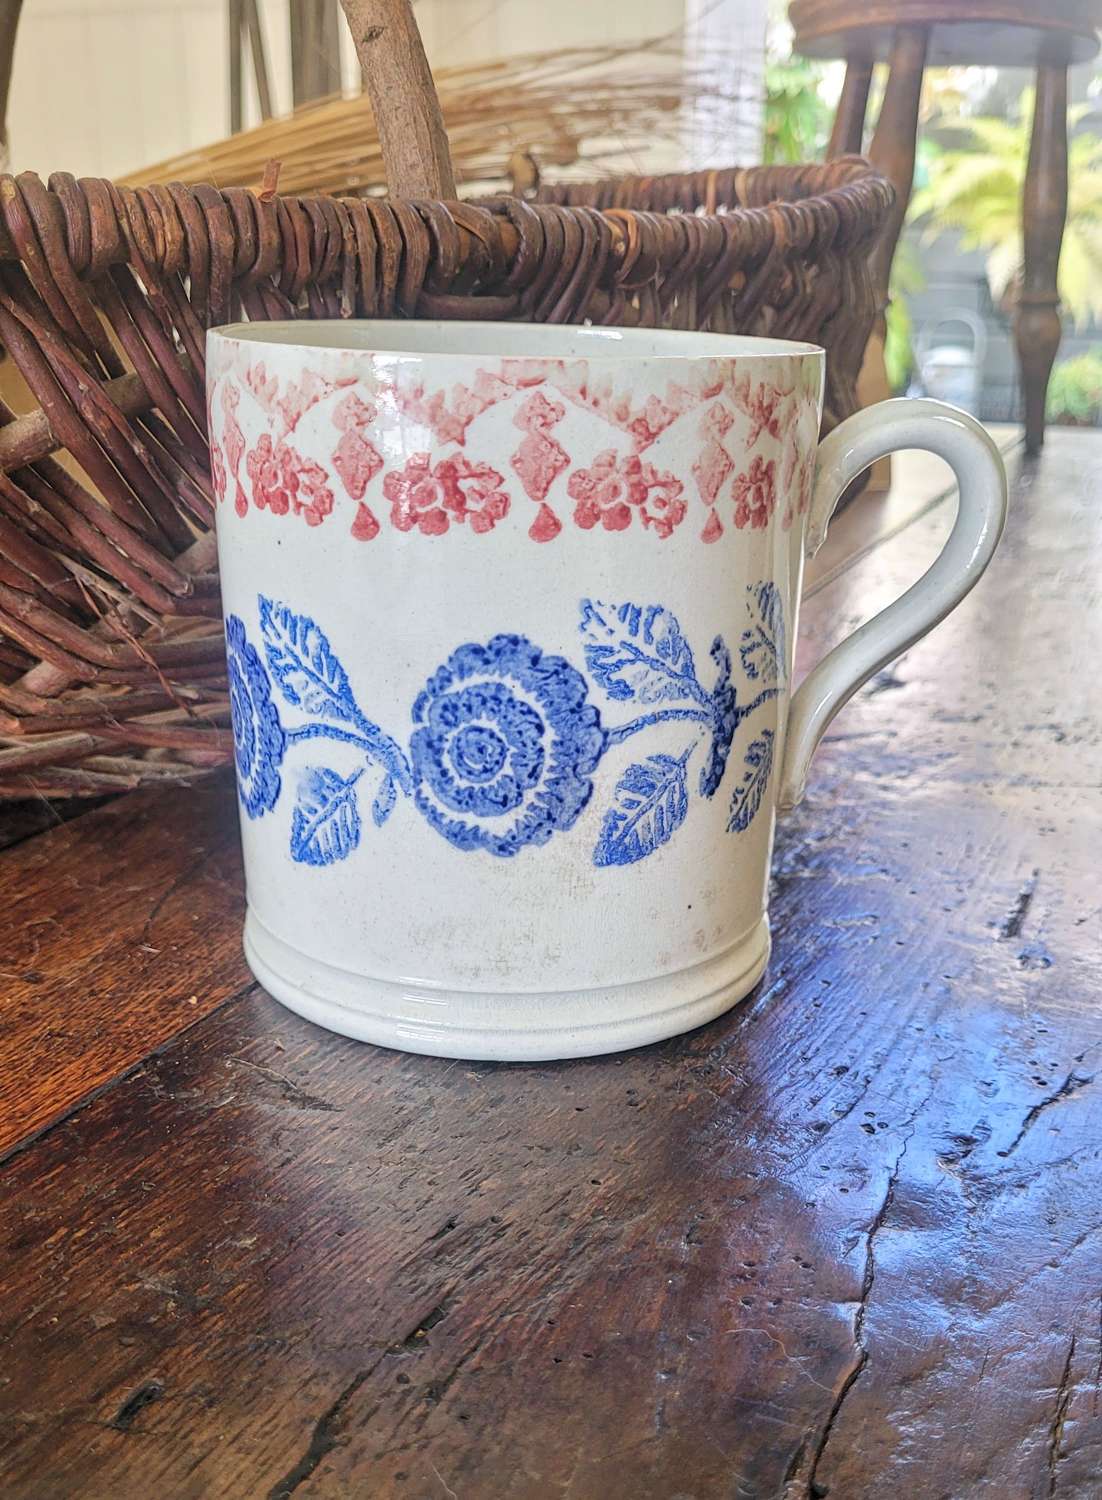 19th century spongeware mug